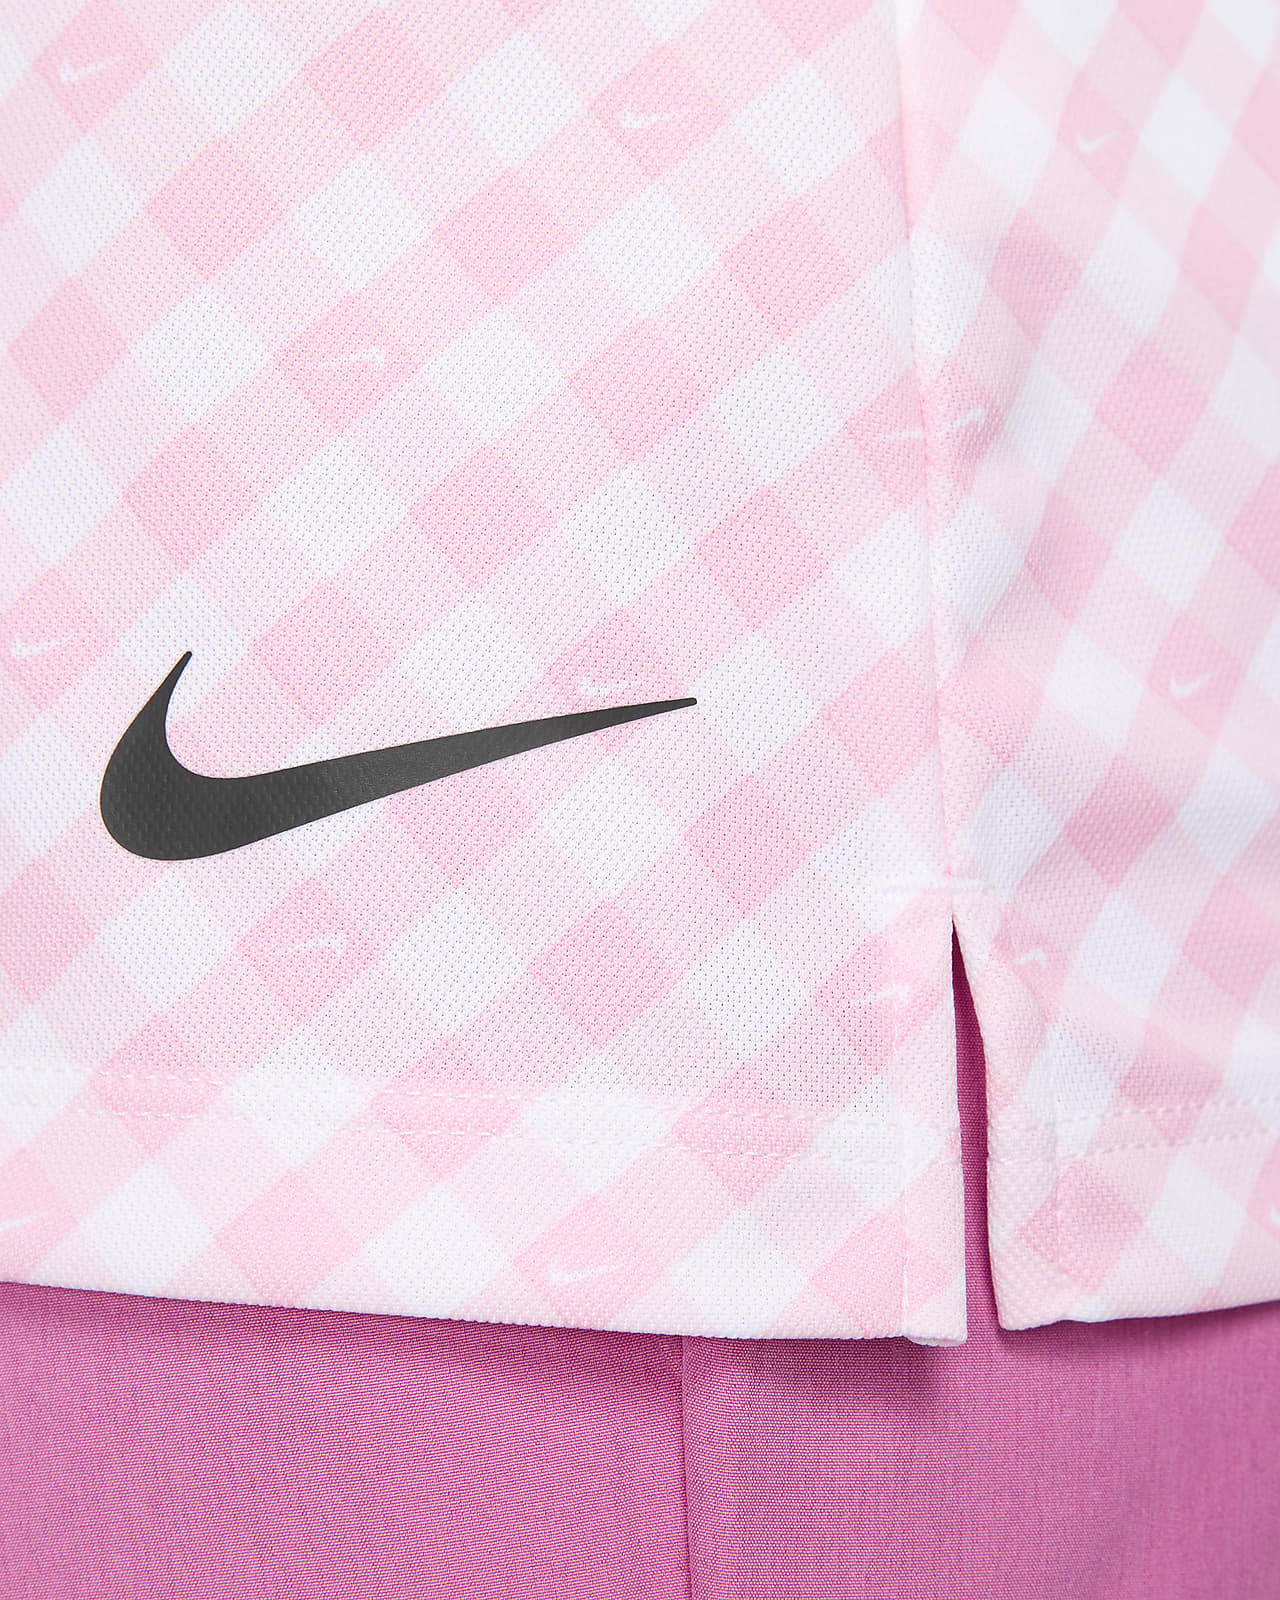 Nike Dri-FIT Victory Women's Short-Sleeve Printed Golf Polo. Nike LU